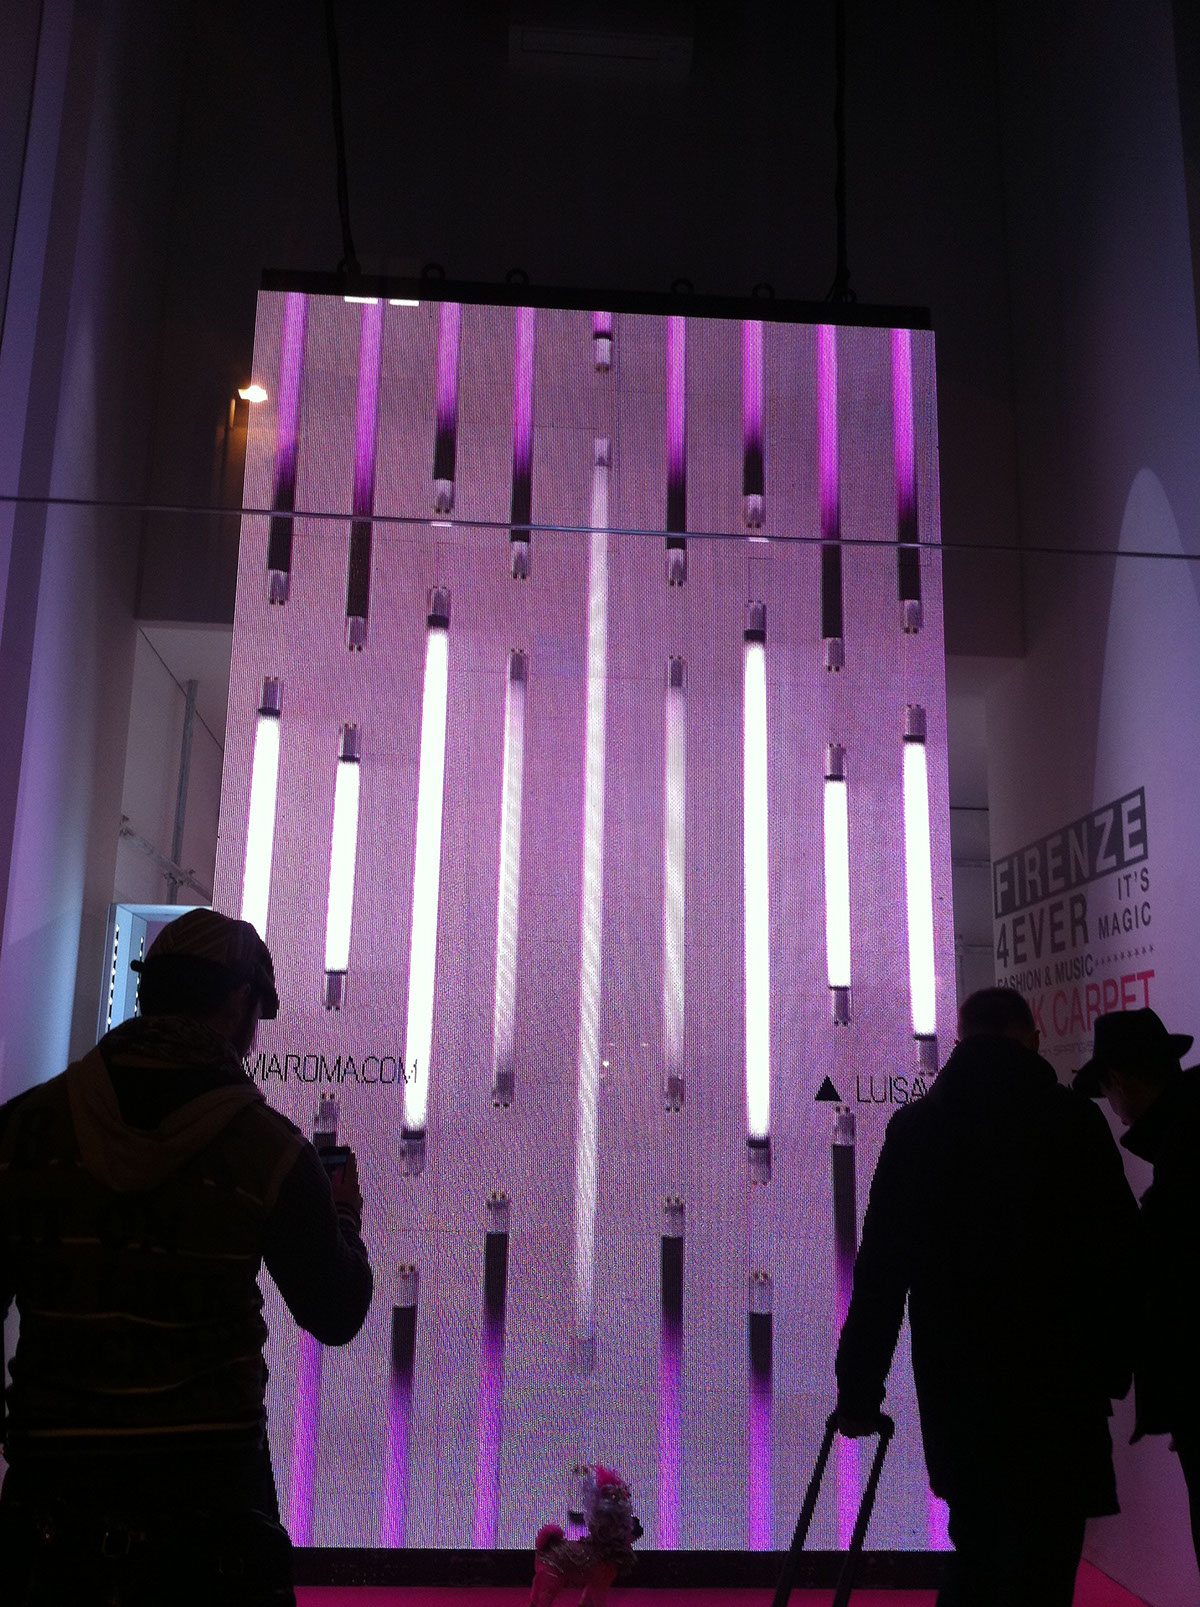 Pitti  interactive  luisaviaroma leonardoworx neon 3D visuals MAX  msp  jitter  sounds ledwall pink firenze4ever